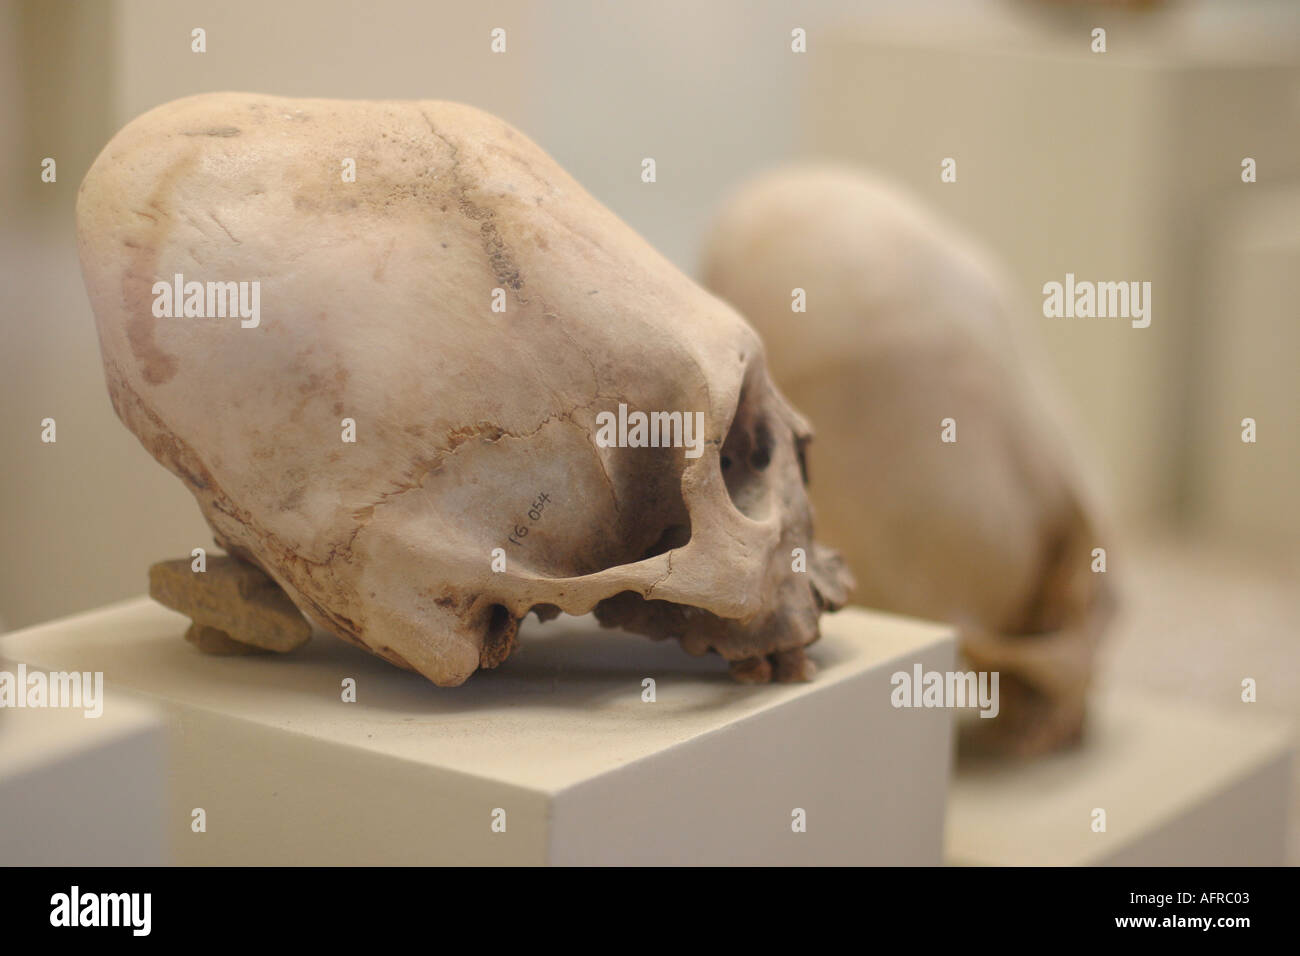 Human skull reshaped by trepaning Paraca pre Inca culture Cerro Colorado museum Peru Stock Photo